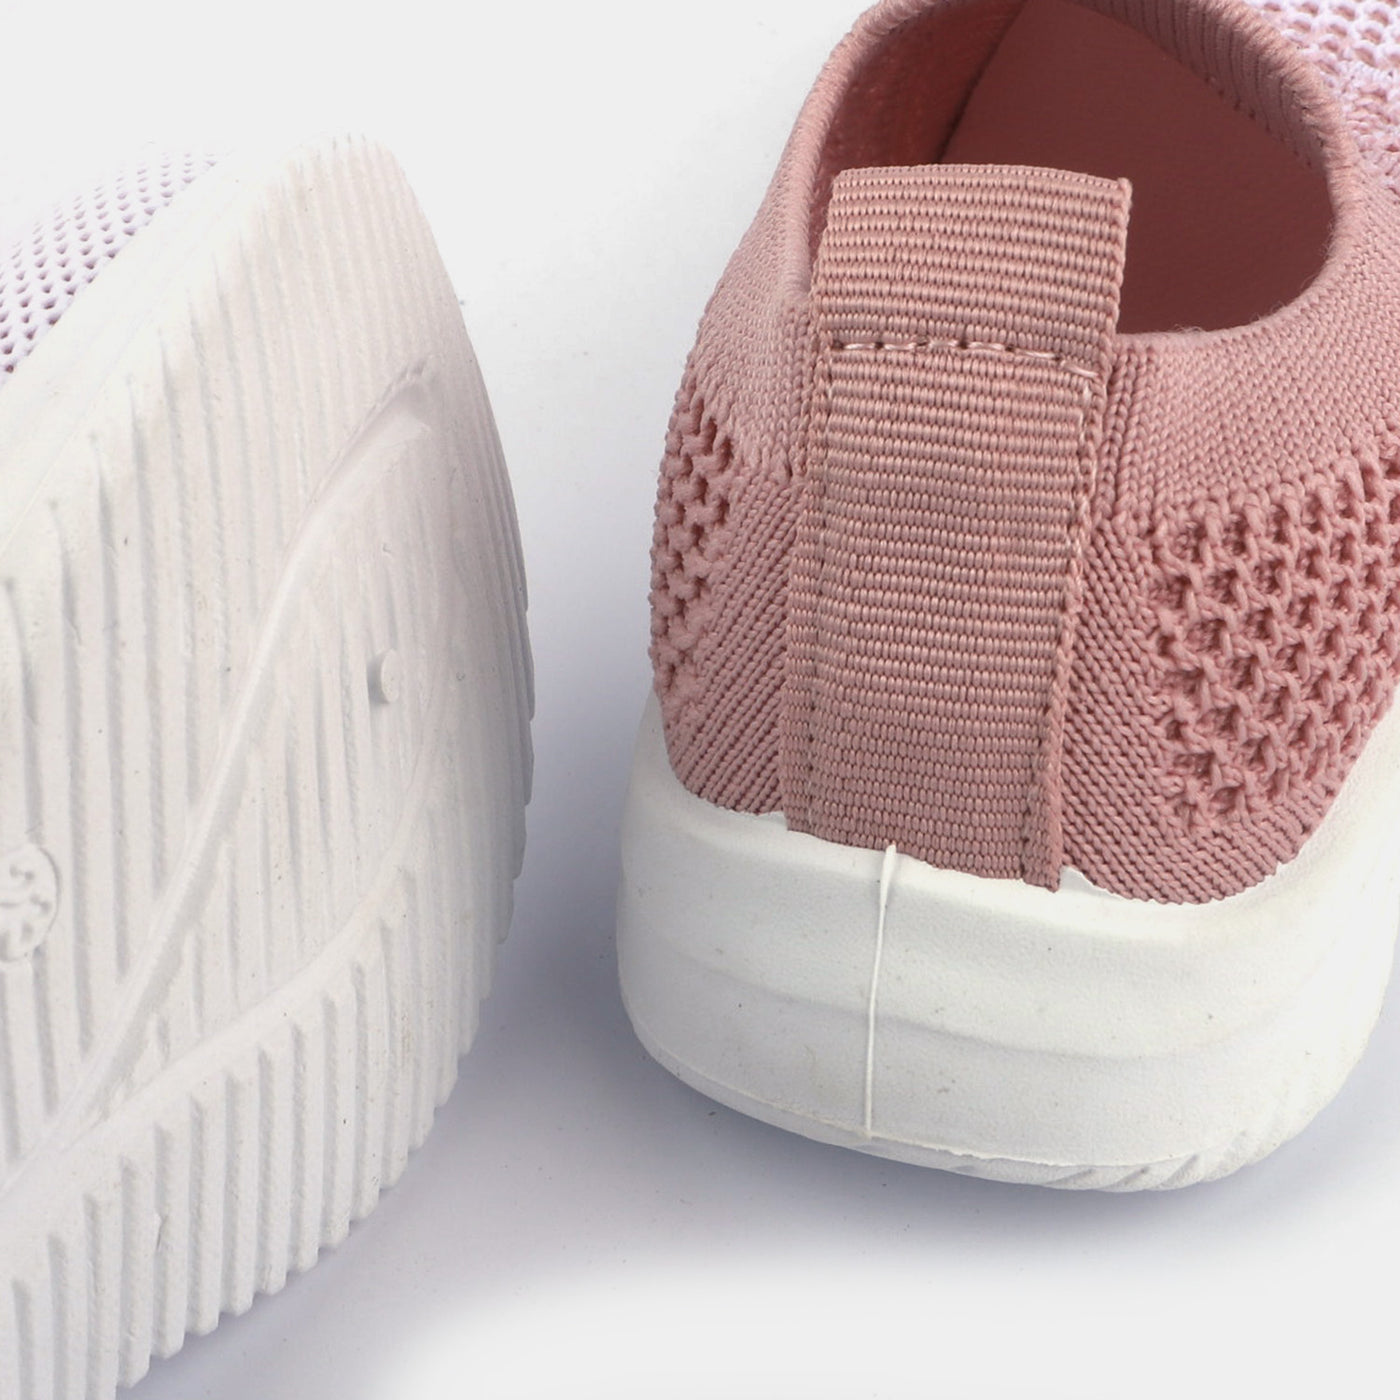 Girls Sneakers 201-Pink